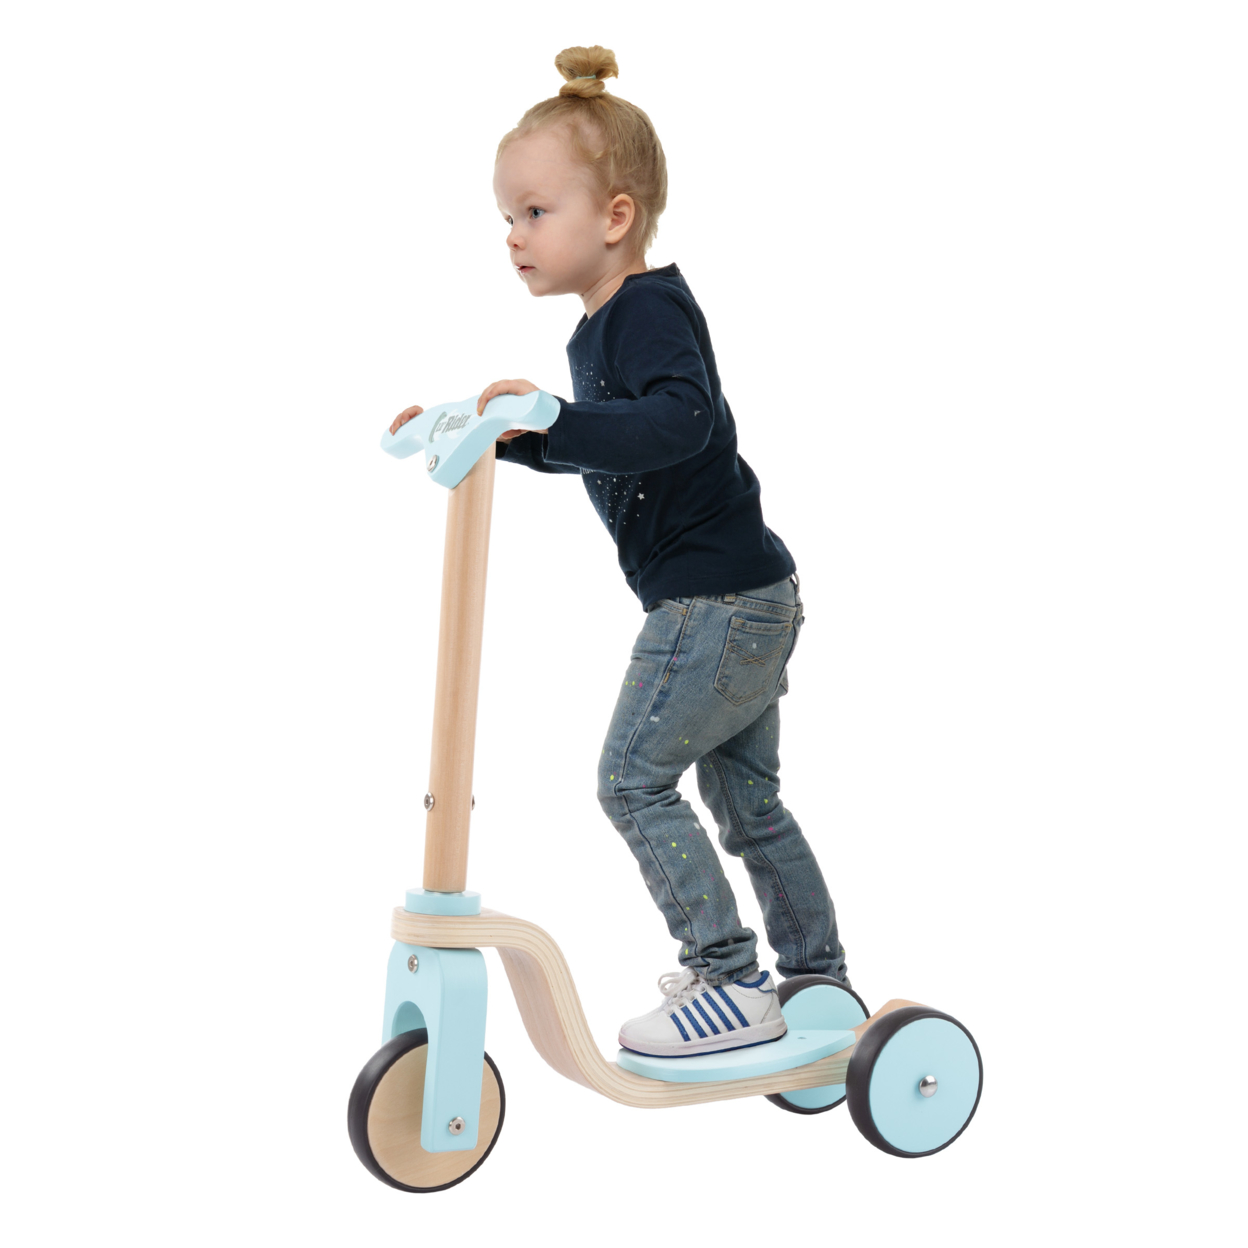 Kids Wooden Scooter-Beginner Push Steering Handlebar, 3 Wheel, Kick Scooter-Fun Balance And Coordination Riding Toy